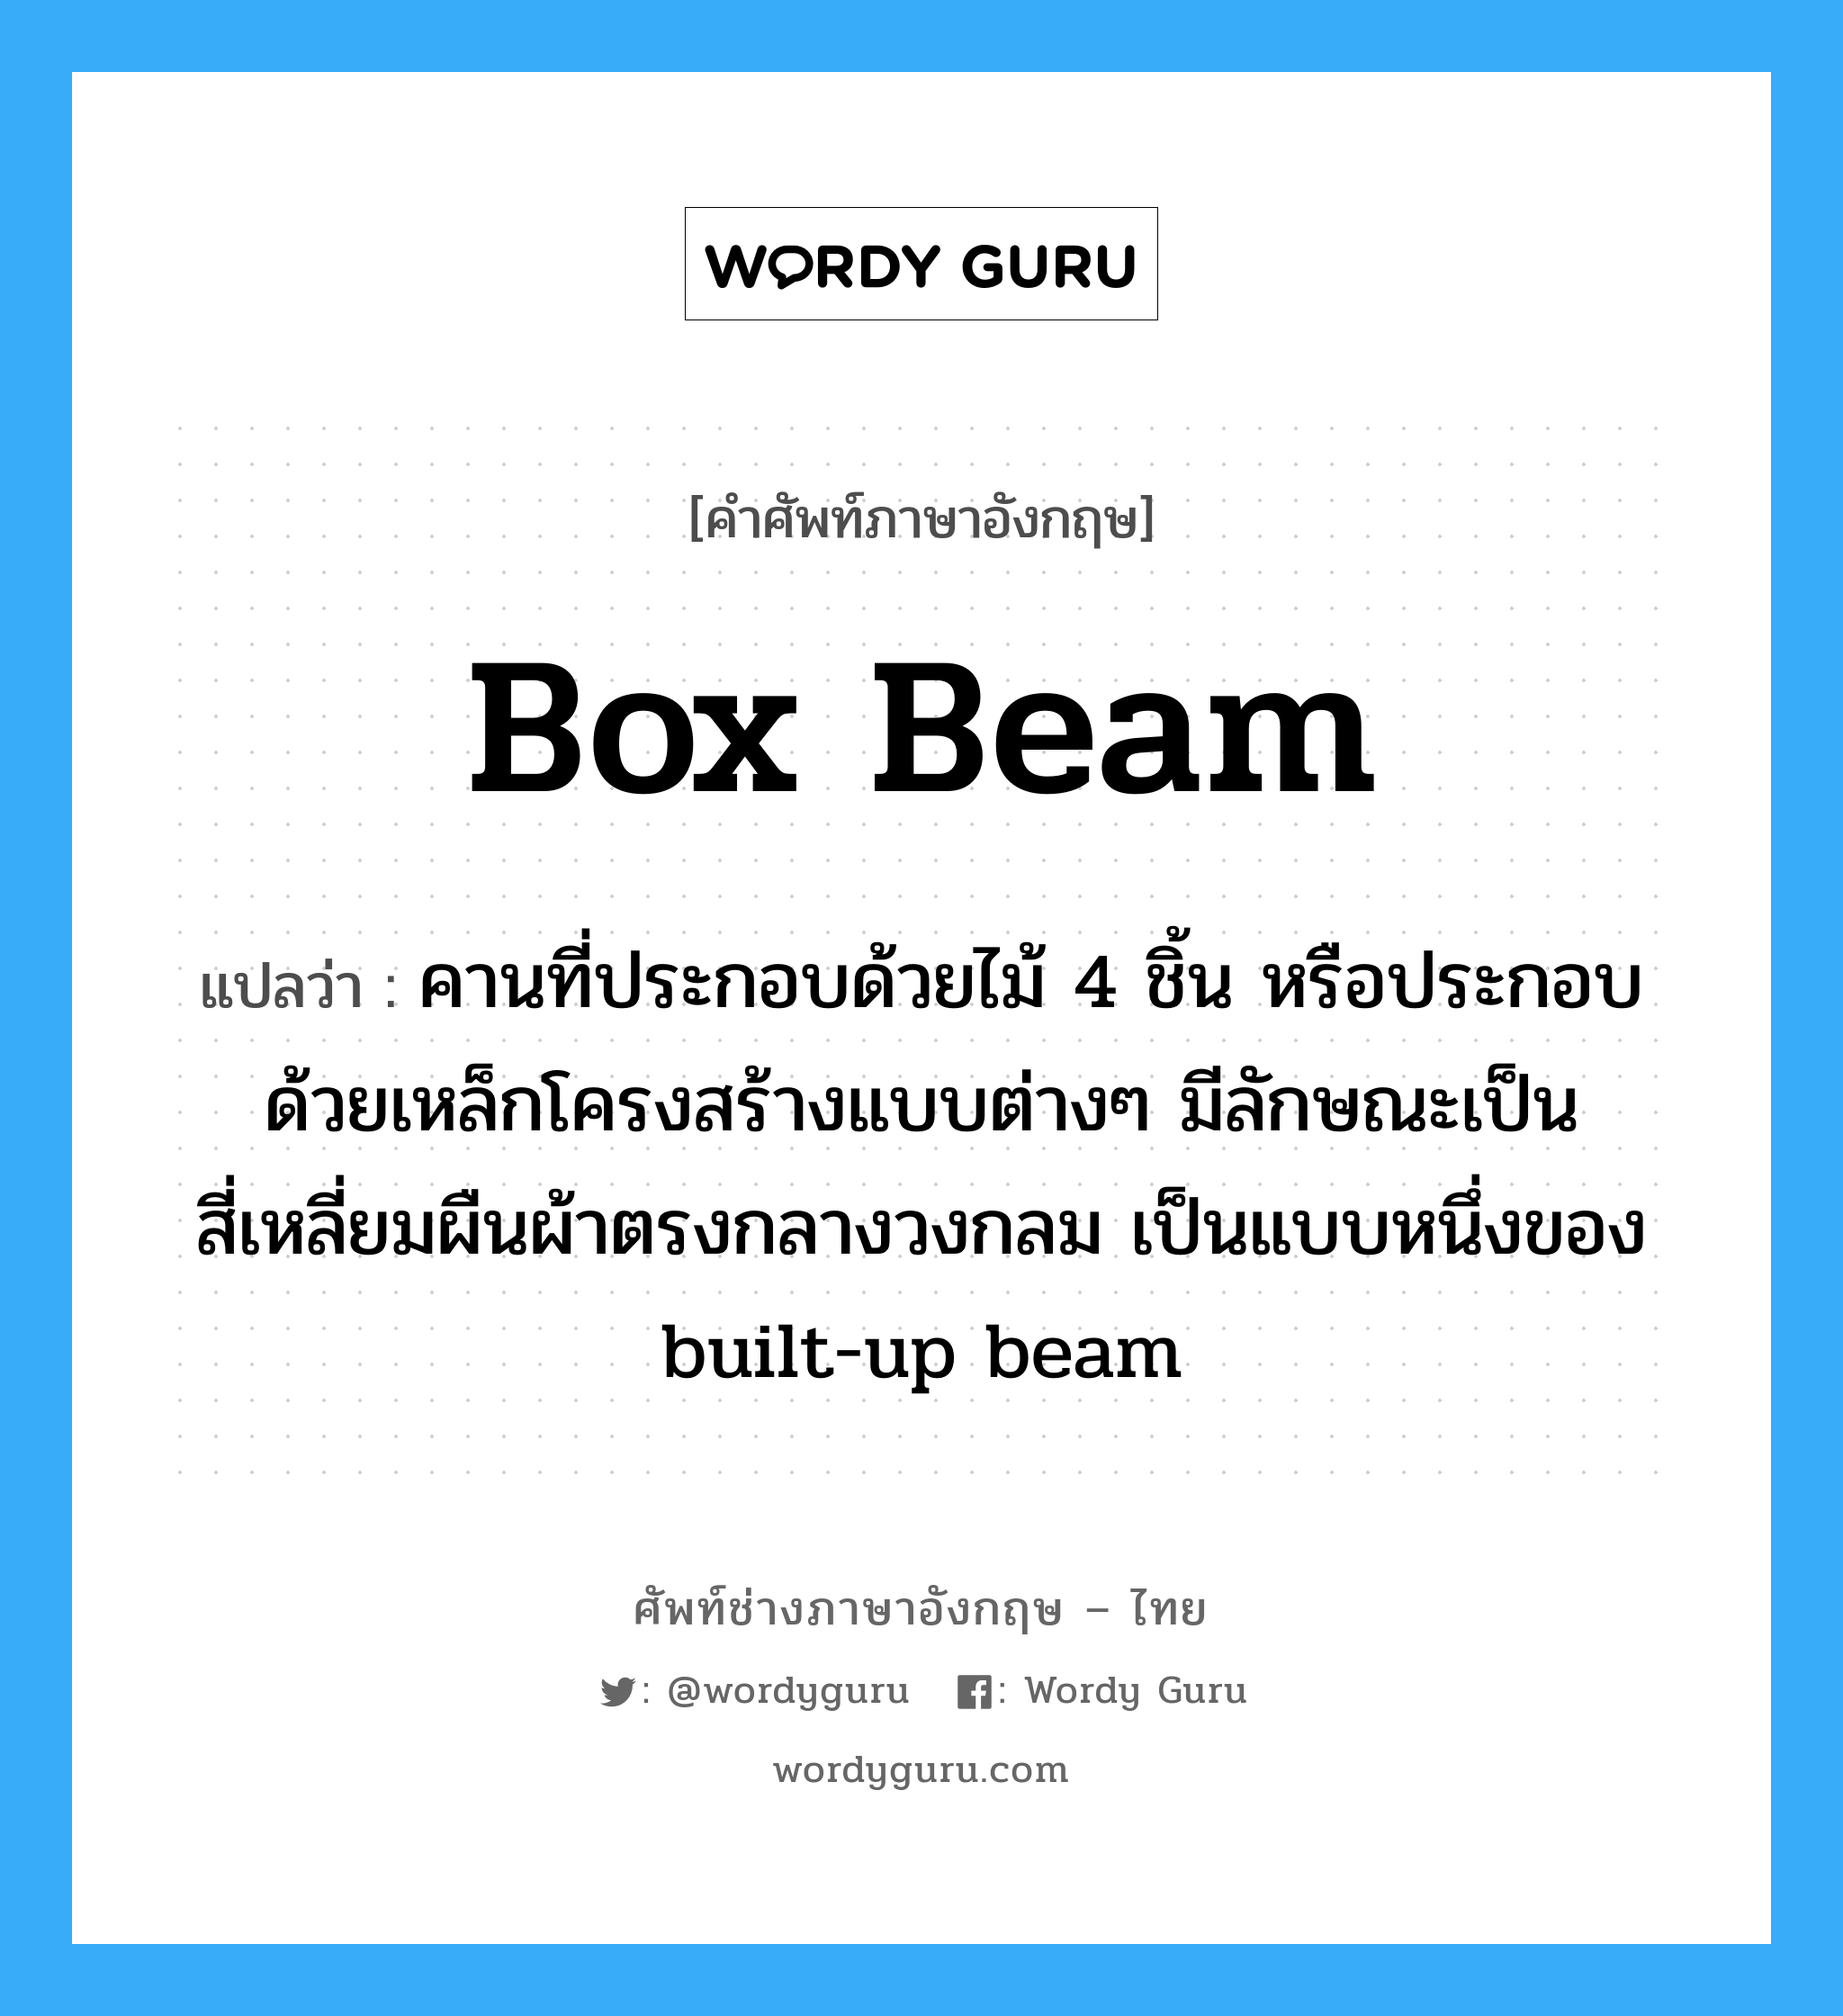 box-beam แปลว่า?, คำศัพท์ช่างภาษาอังกฤษ - ไทย box beam คำศัพท์ภาษาอังกฤษ box beam แปลว่า คานที่ประกอบด้วยไม้ 4 ชิ้น หรือประกอบด้วยเหล็กโครงสร้างแบบต่างๆ มีลักษณะเป็นสี่เหลี่ยมผืนผ้าตรงกลางวงกลม เป็นแบบหนึ่งของ built-up beam